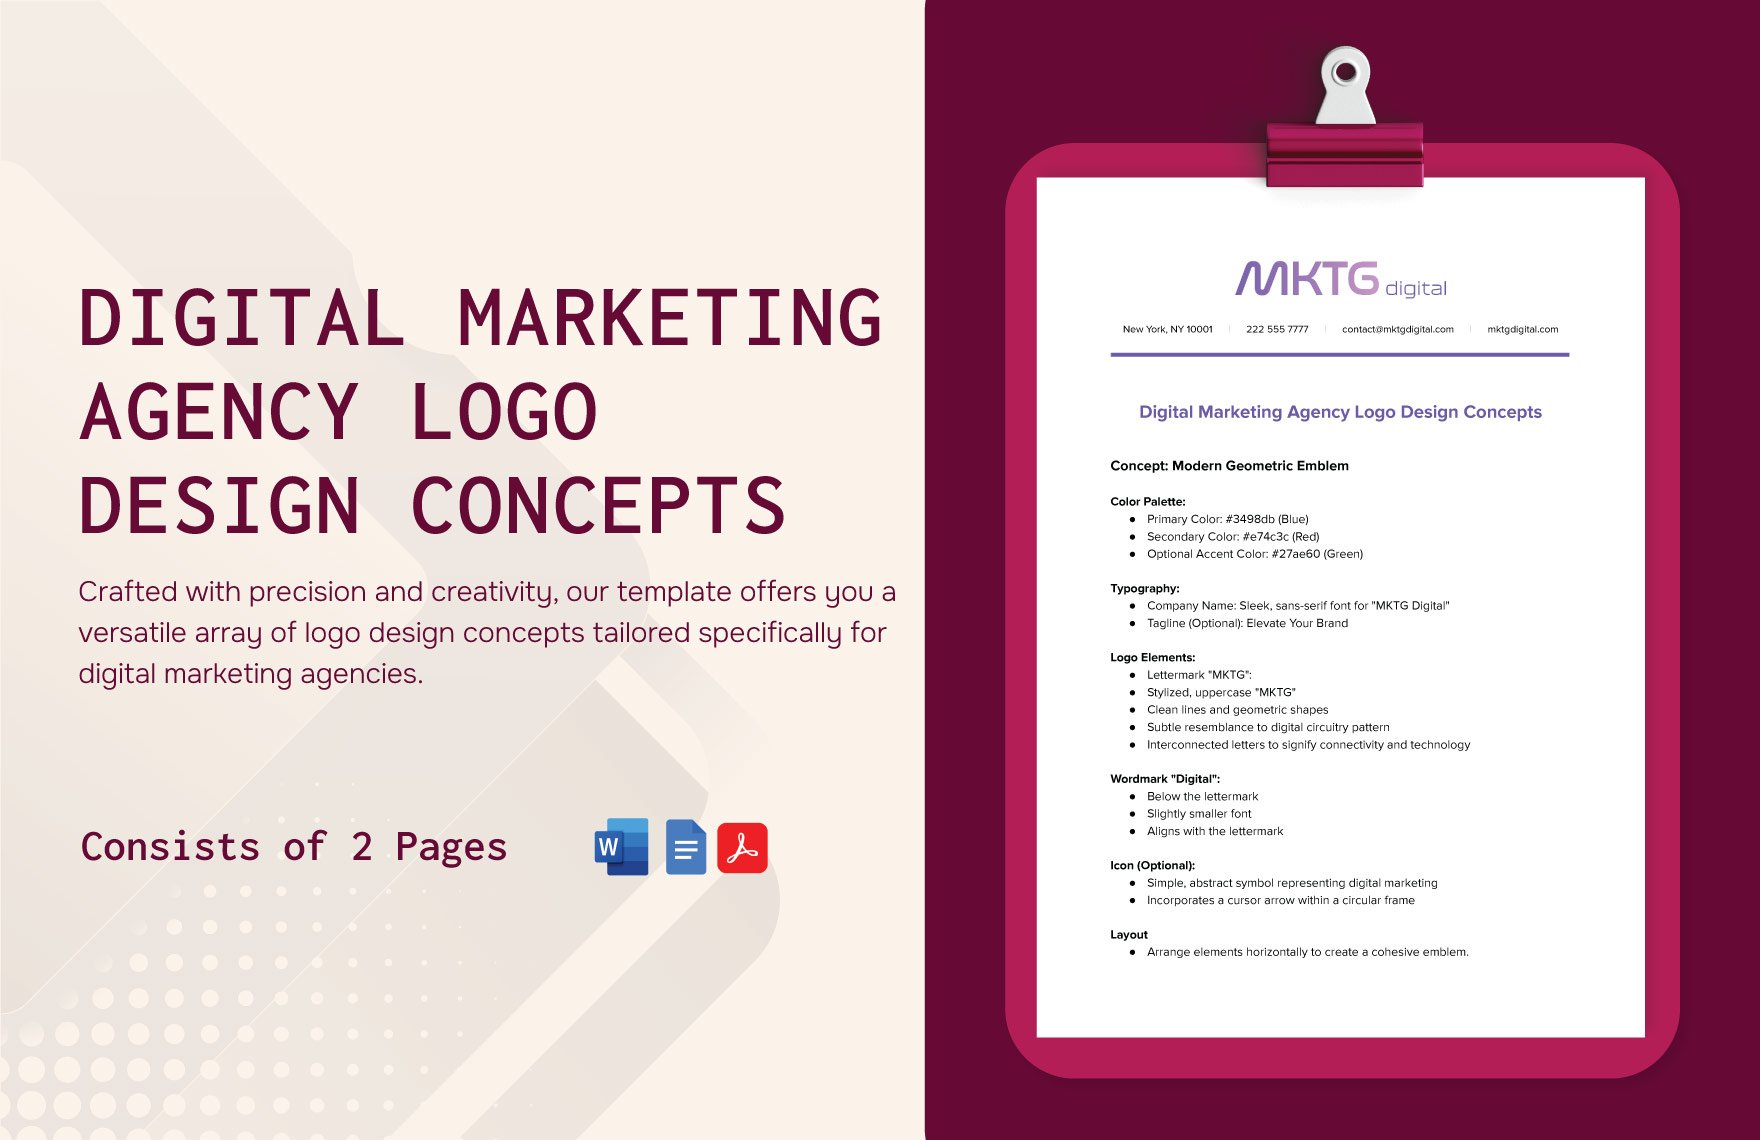 Digital Marketing Agency Logo Design Concepts Template